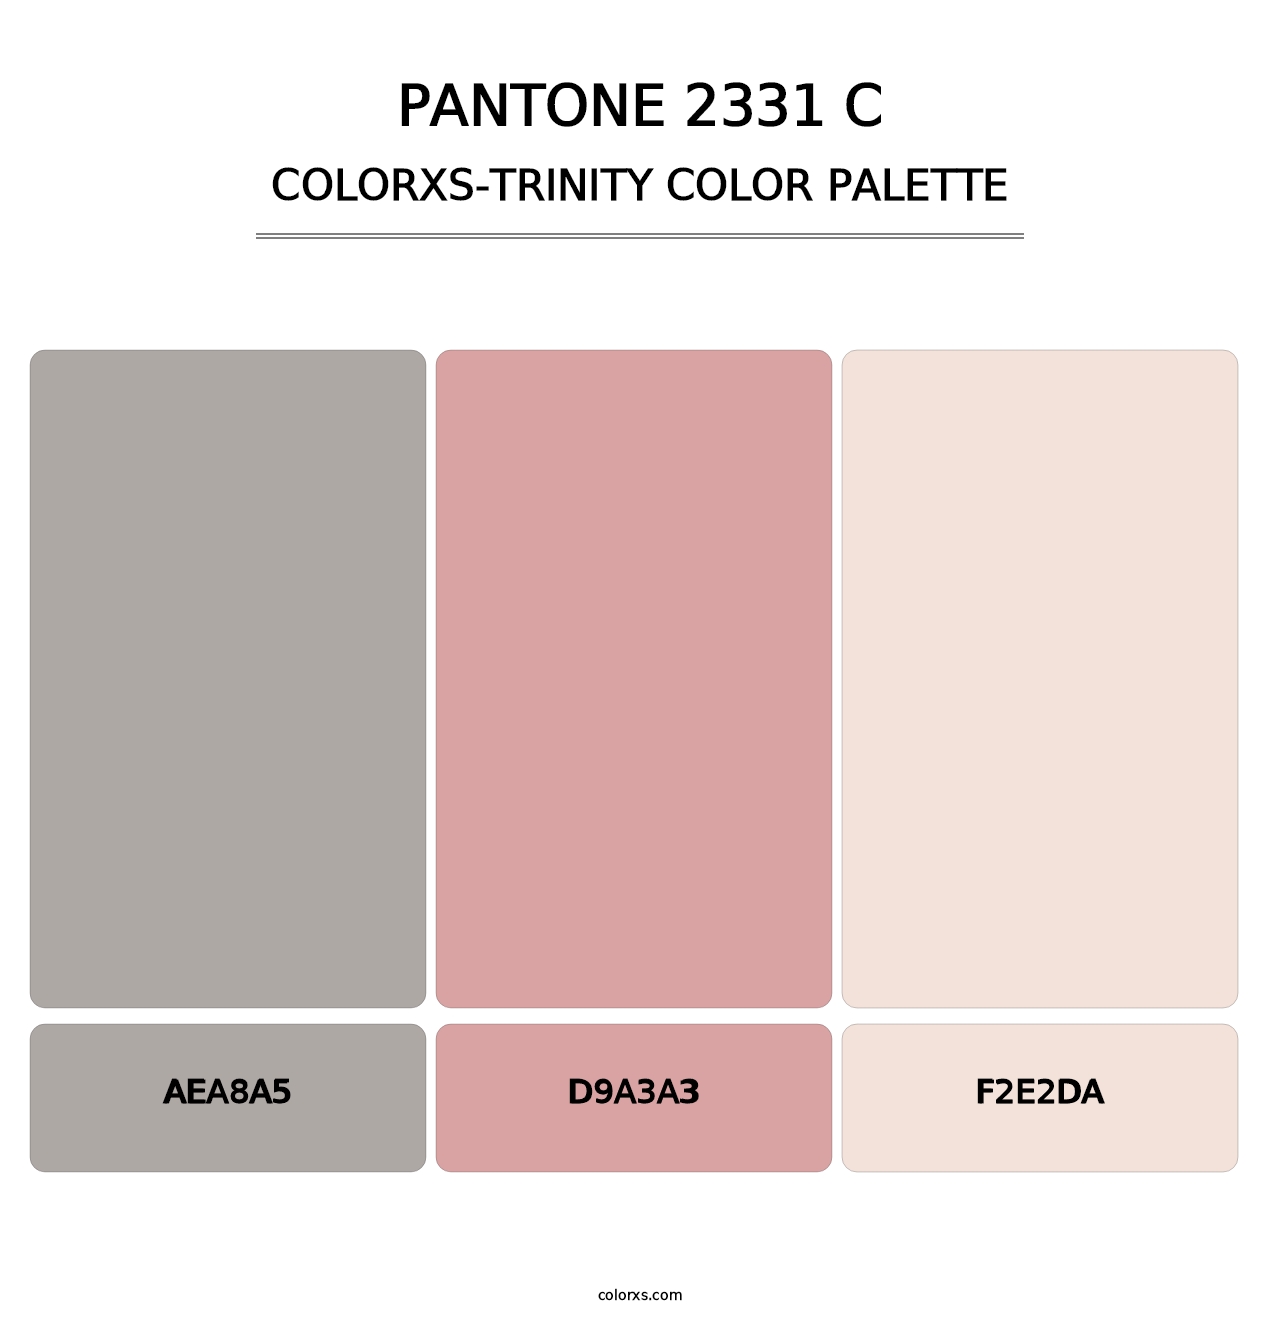 PANTONE 2331 C - Colorxs Trinity Palette